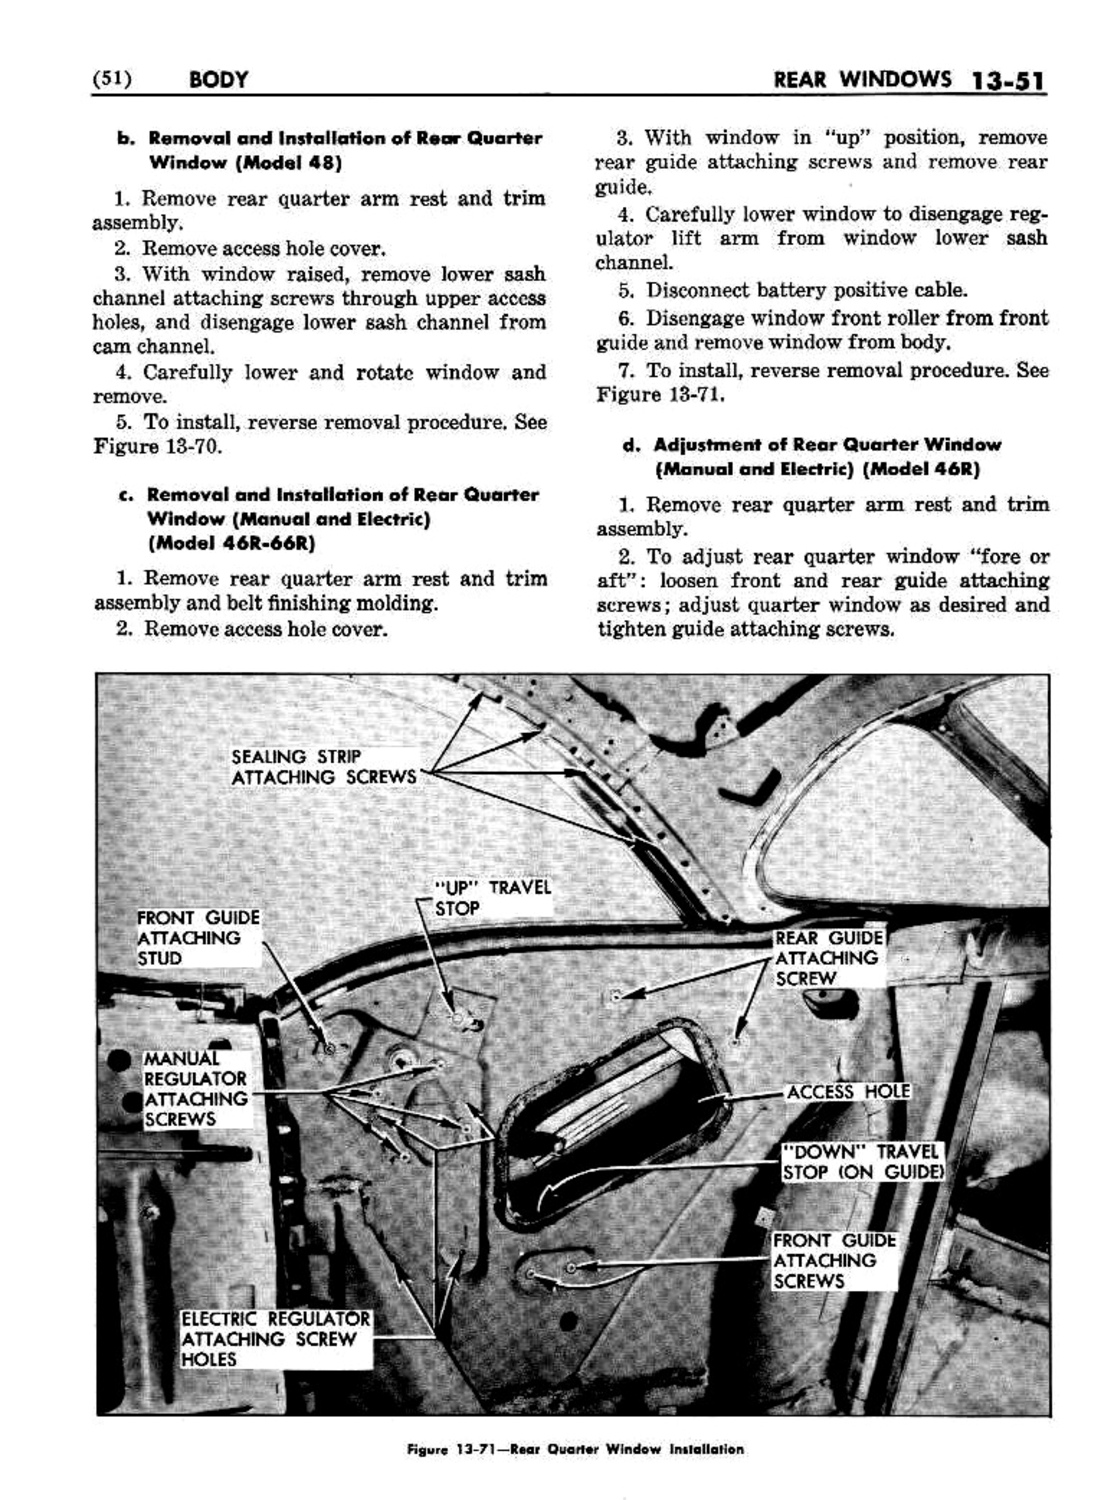 n_1958 Buick Body Service Manual-052-052.jpg